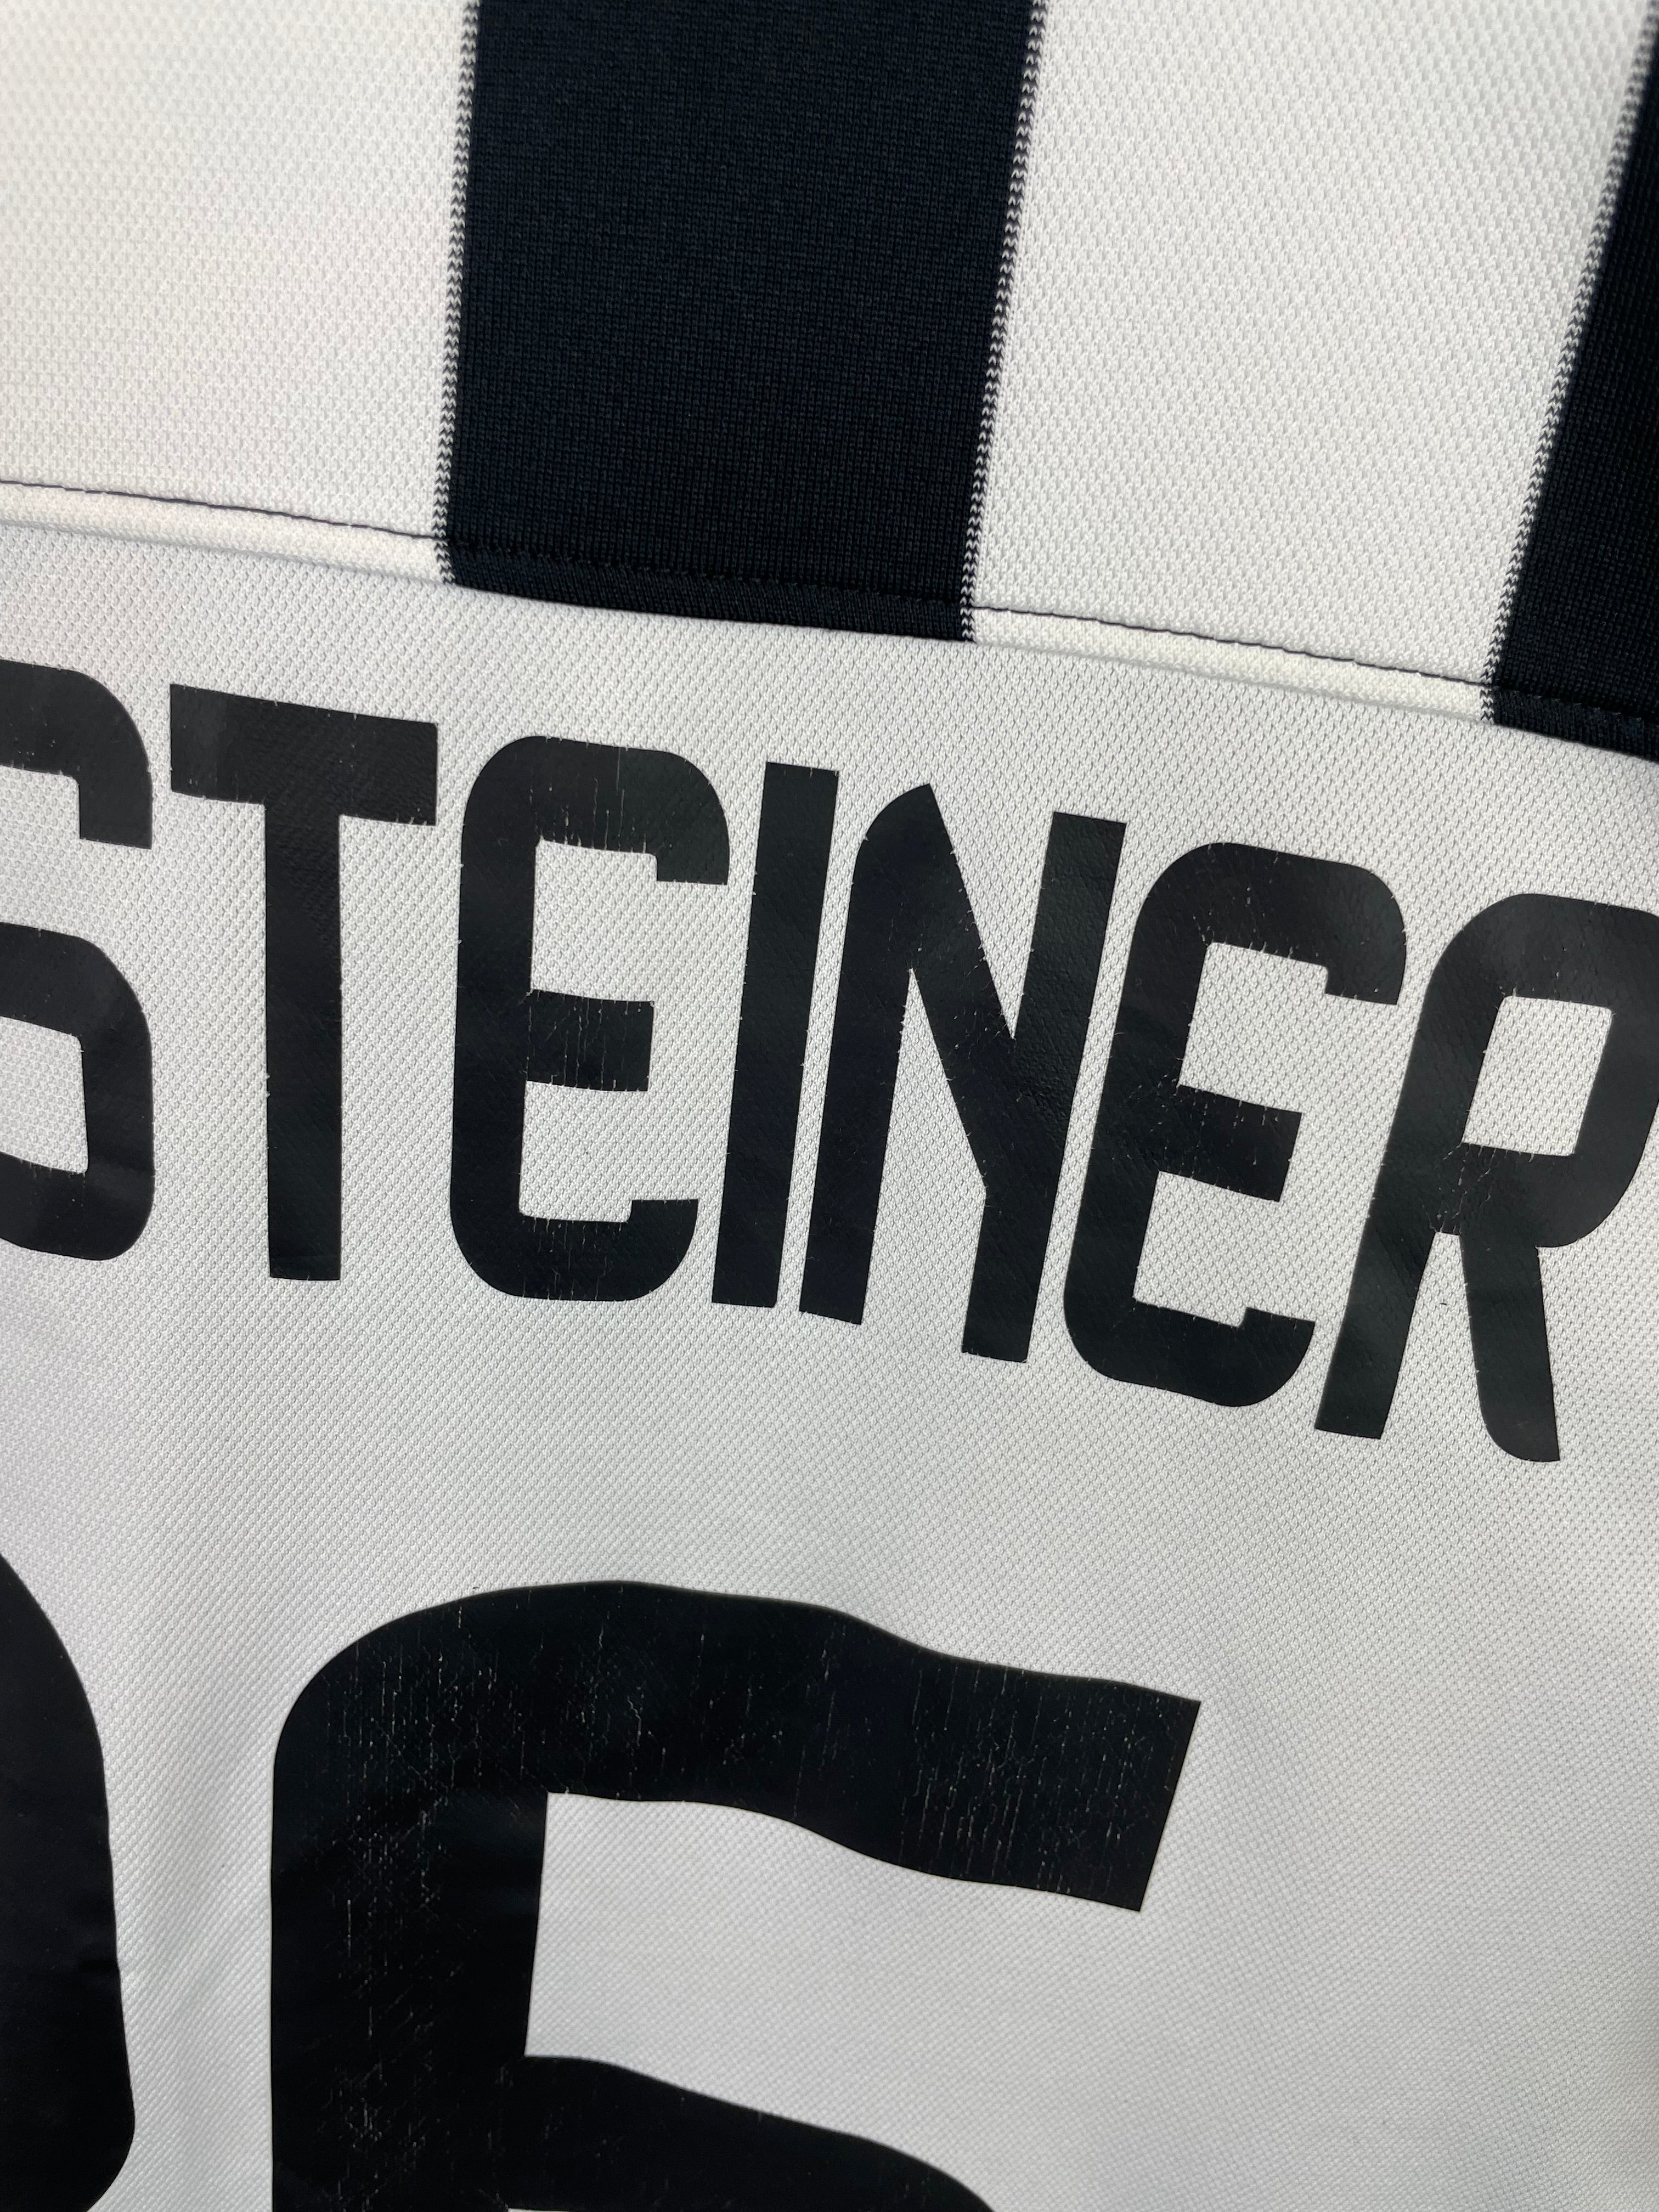 Stephan Lichensteiner Juventus 14/15 hjemmebanetrøje - S